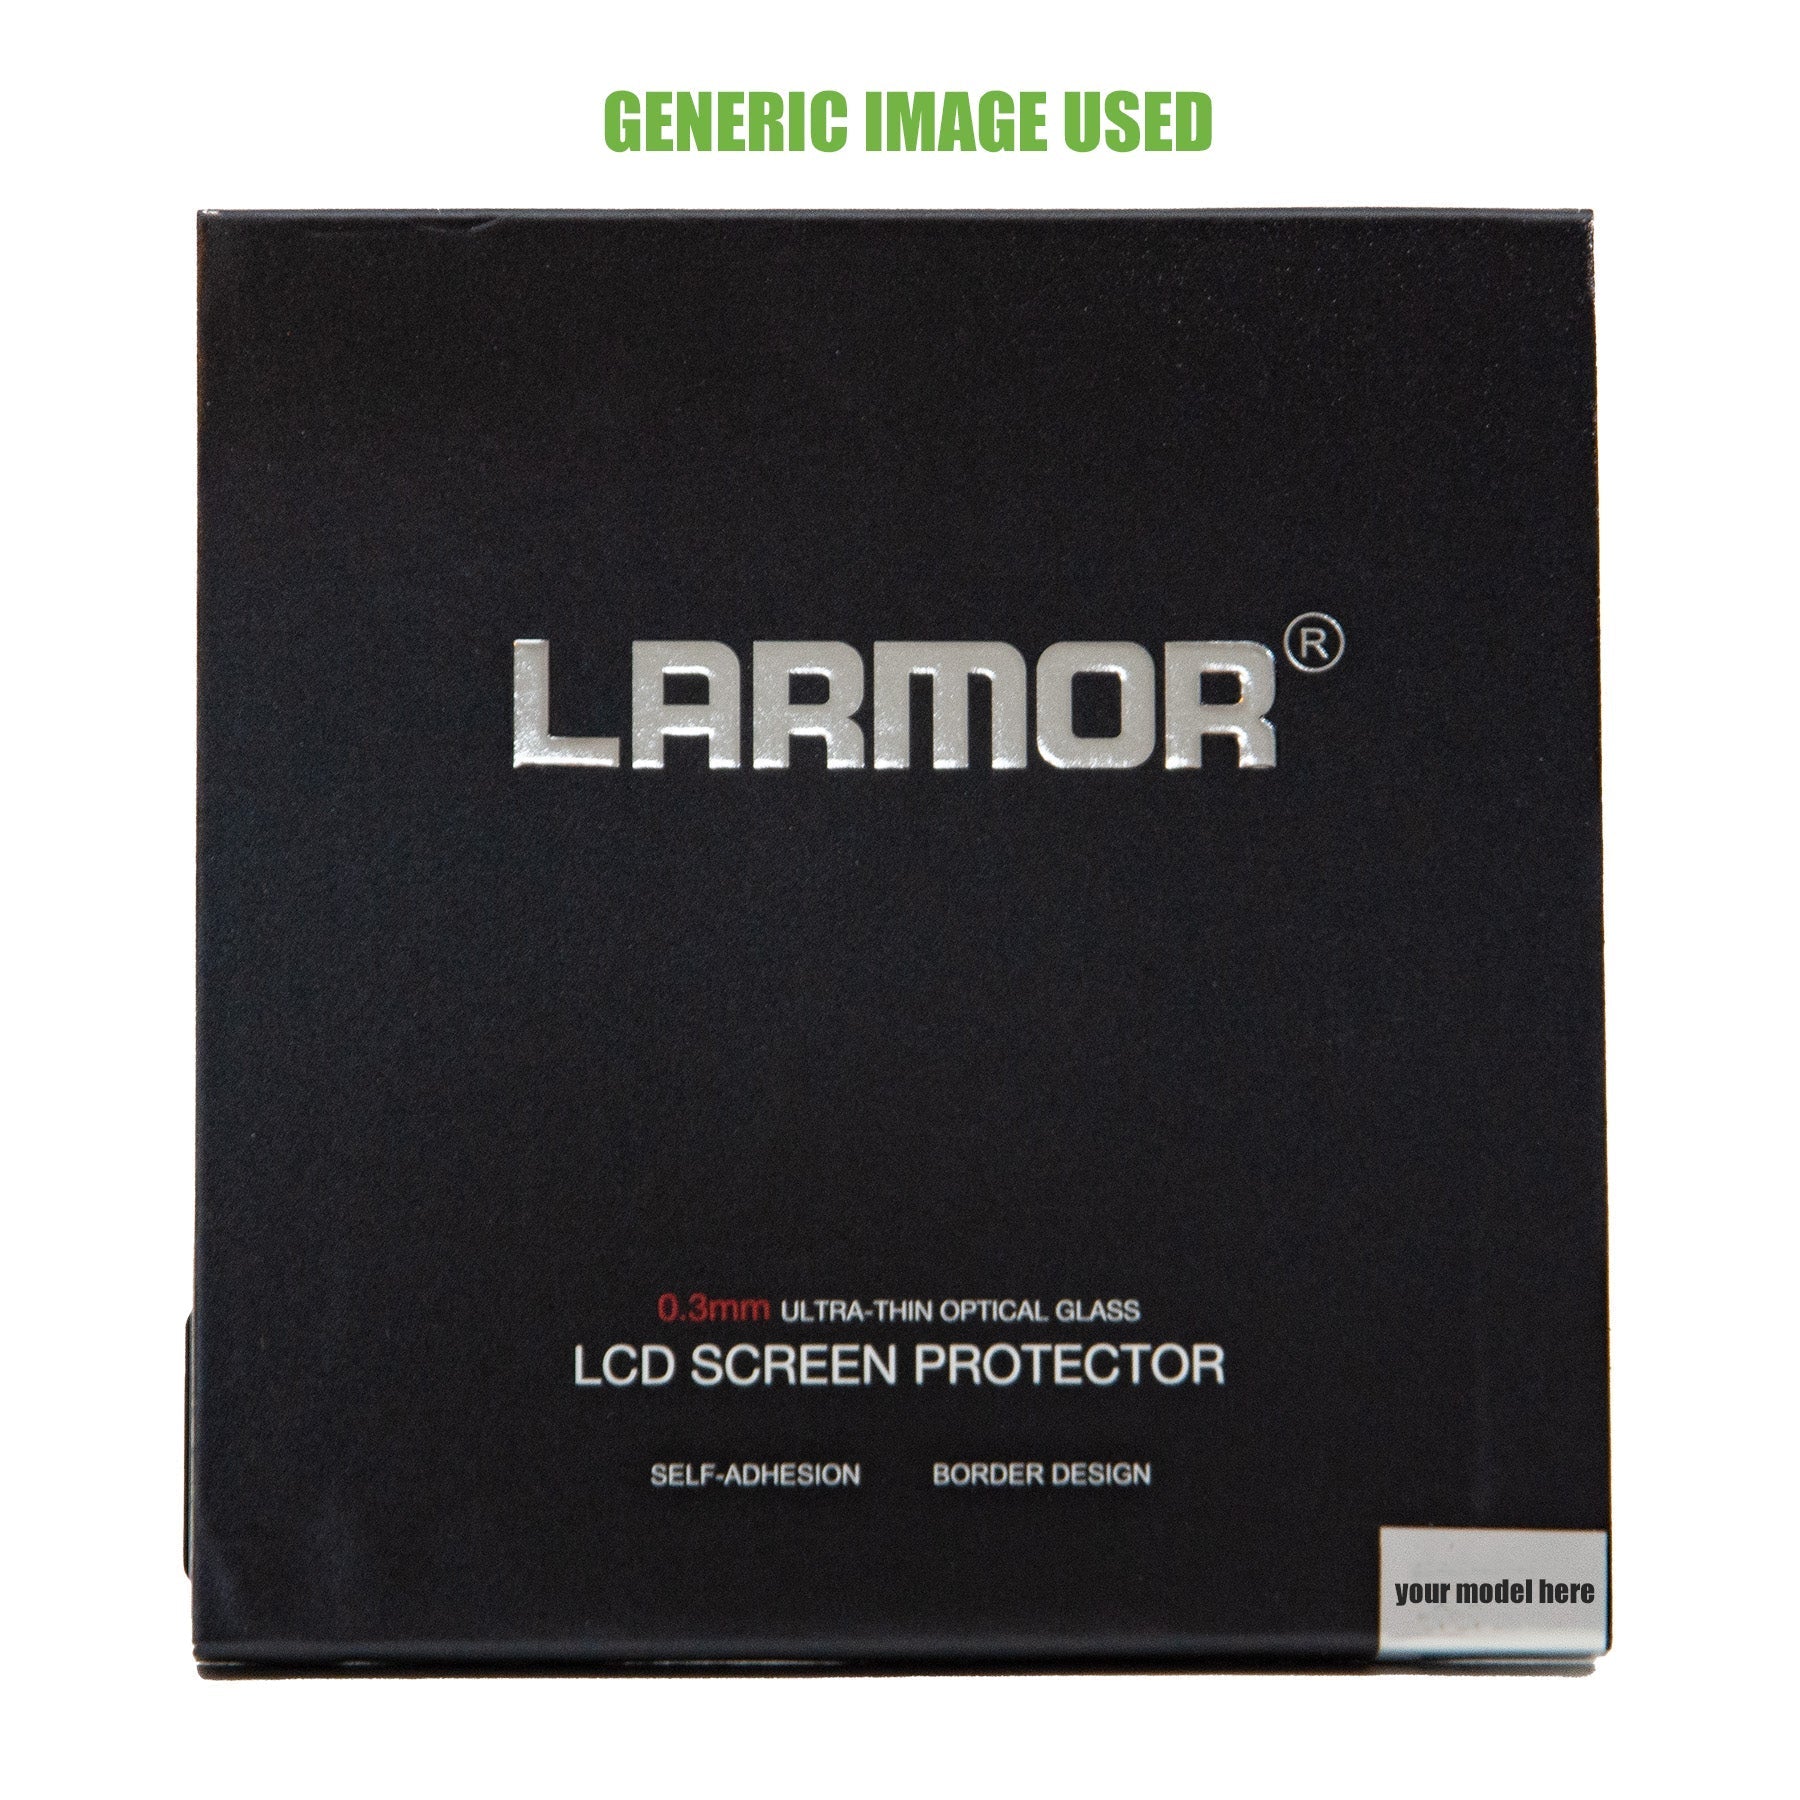 GGS Foto Larmor GEN4 Screen Protector for 3" LCD 16:9 Ratio